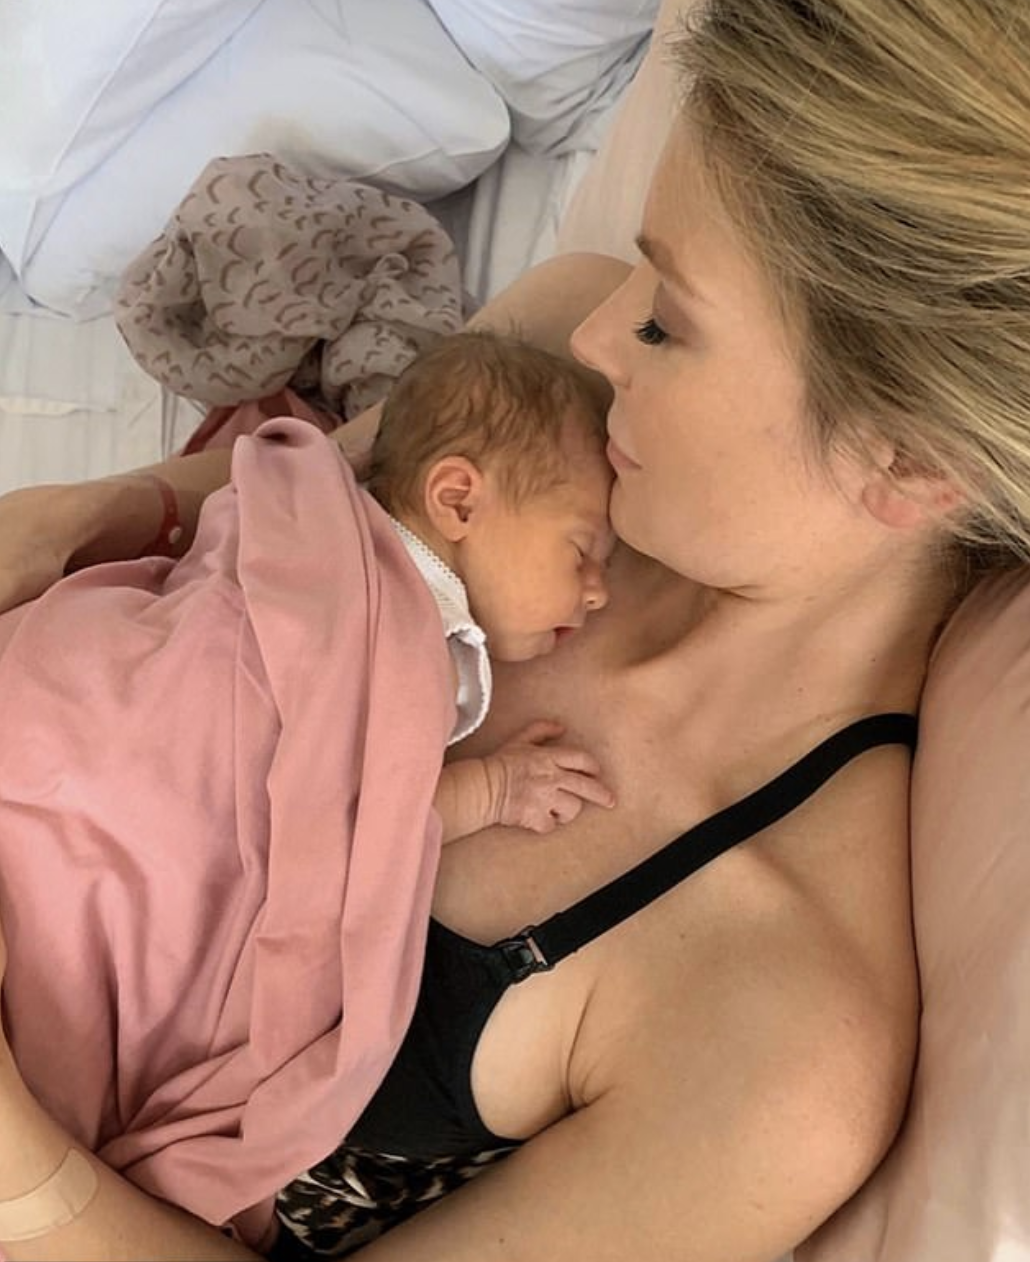 Jennifer Hawkins has welcomed her first child, a daughter named Frankie. Photo: Instagram/jenhawkins_/